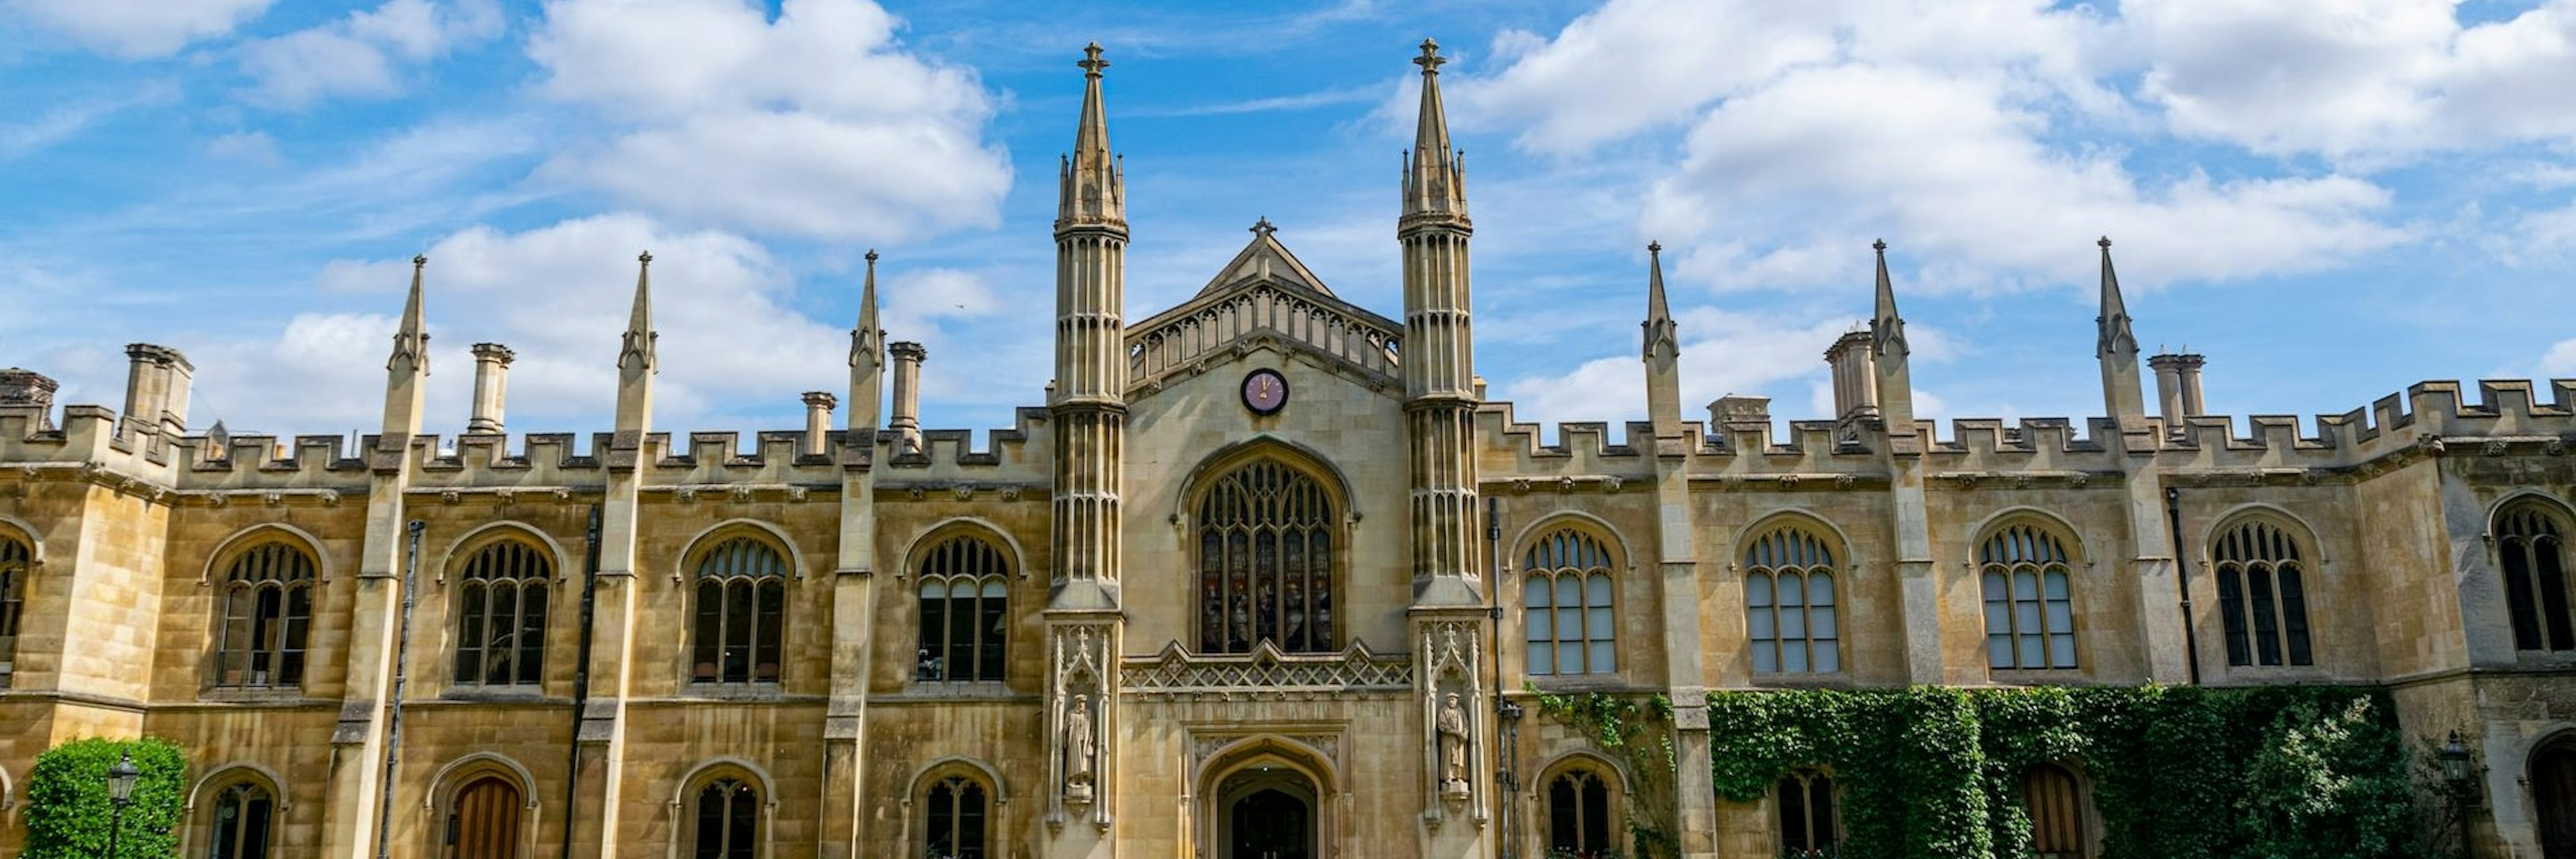 An image of the University of Cambridge, one of Europe's top unicorn universities